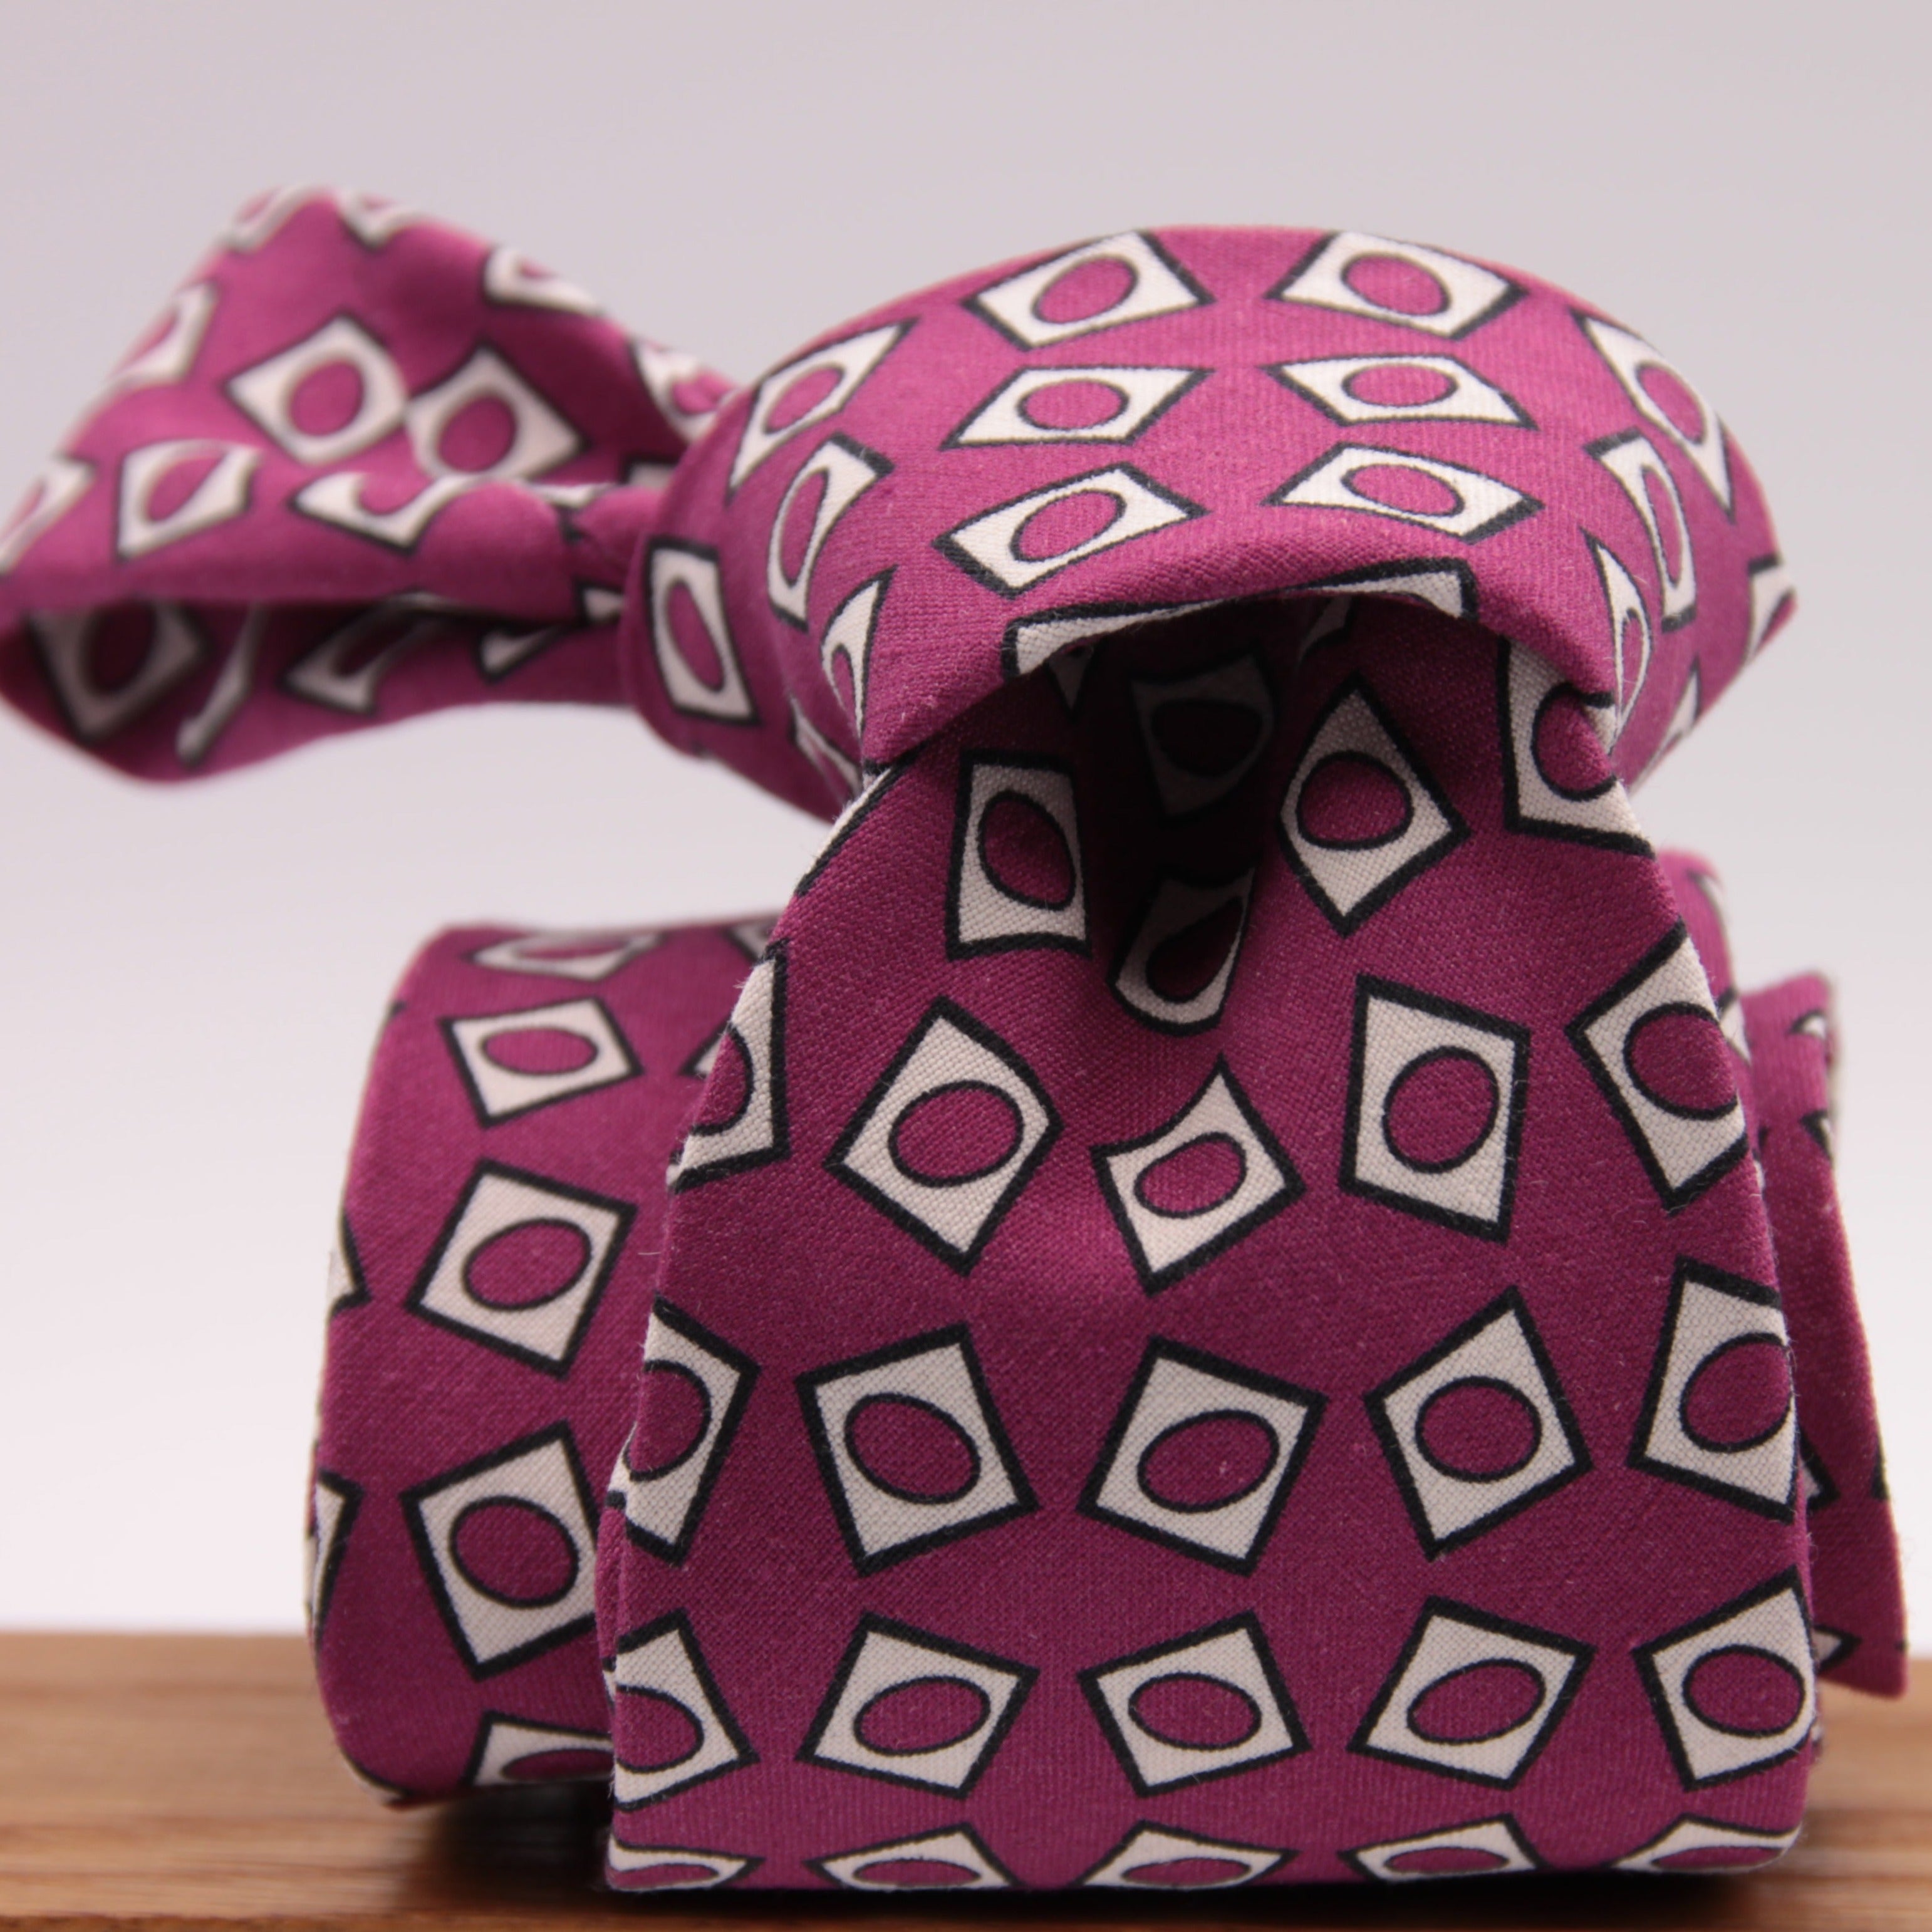 Cruciani & Bella 60% Linen, 40% Silk  Italian fabric Unlined tie Purple and White Handmade in Italy 8 cm x 150 cm #6720